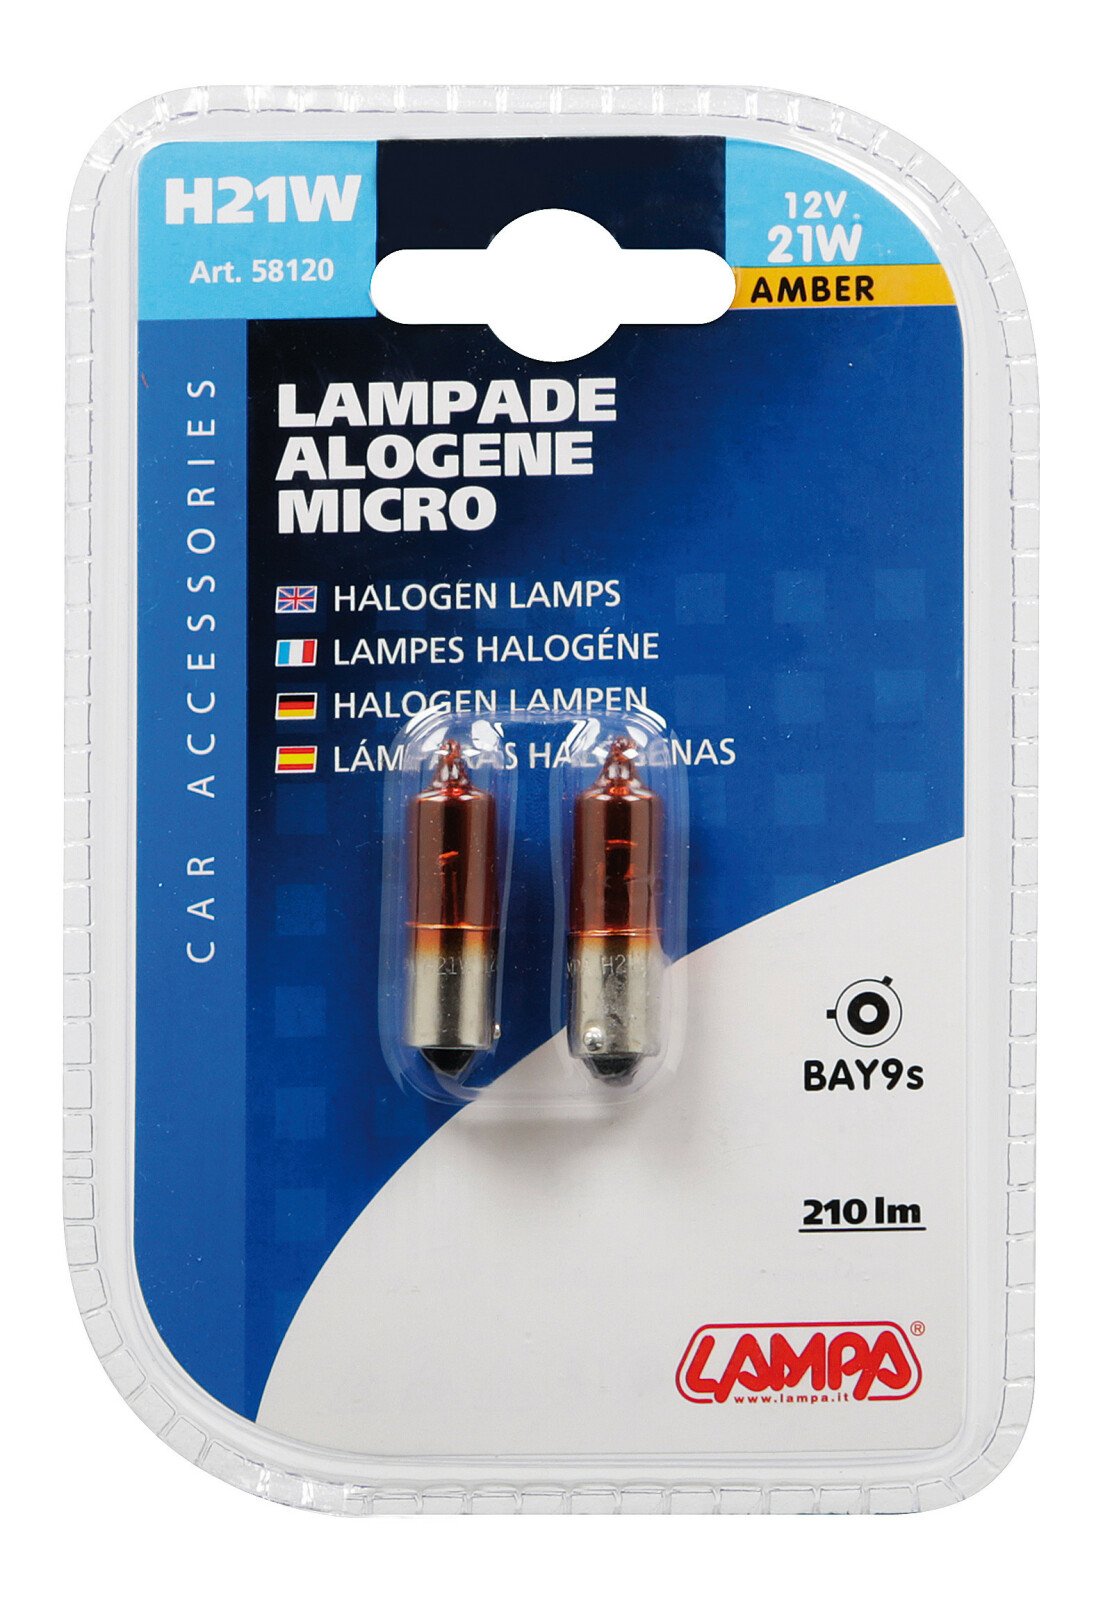 12V Halogen micro lamp HY21W 2pcs - Amber thumb